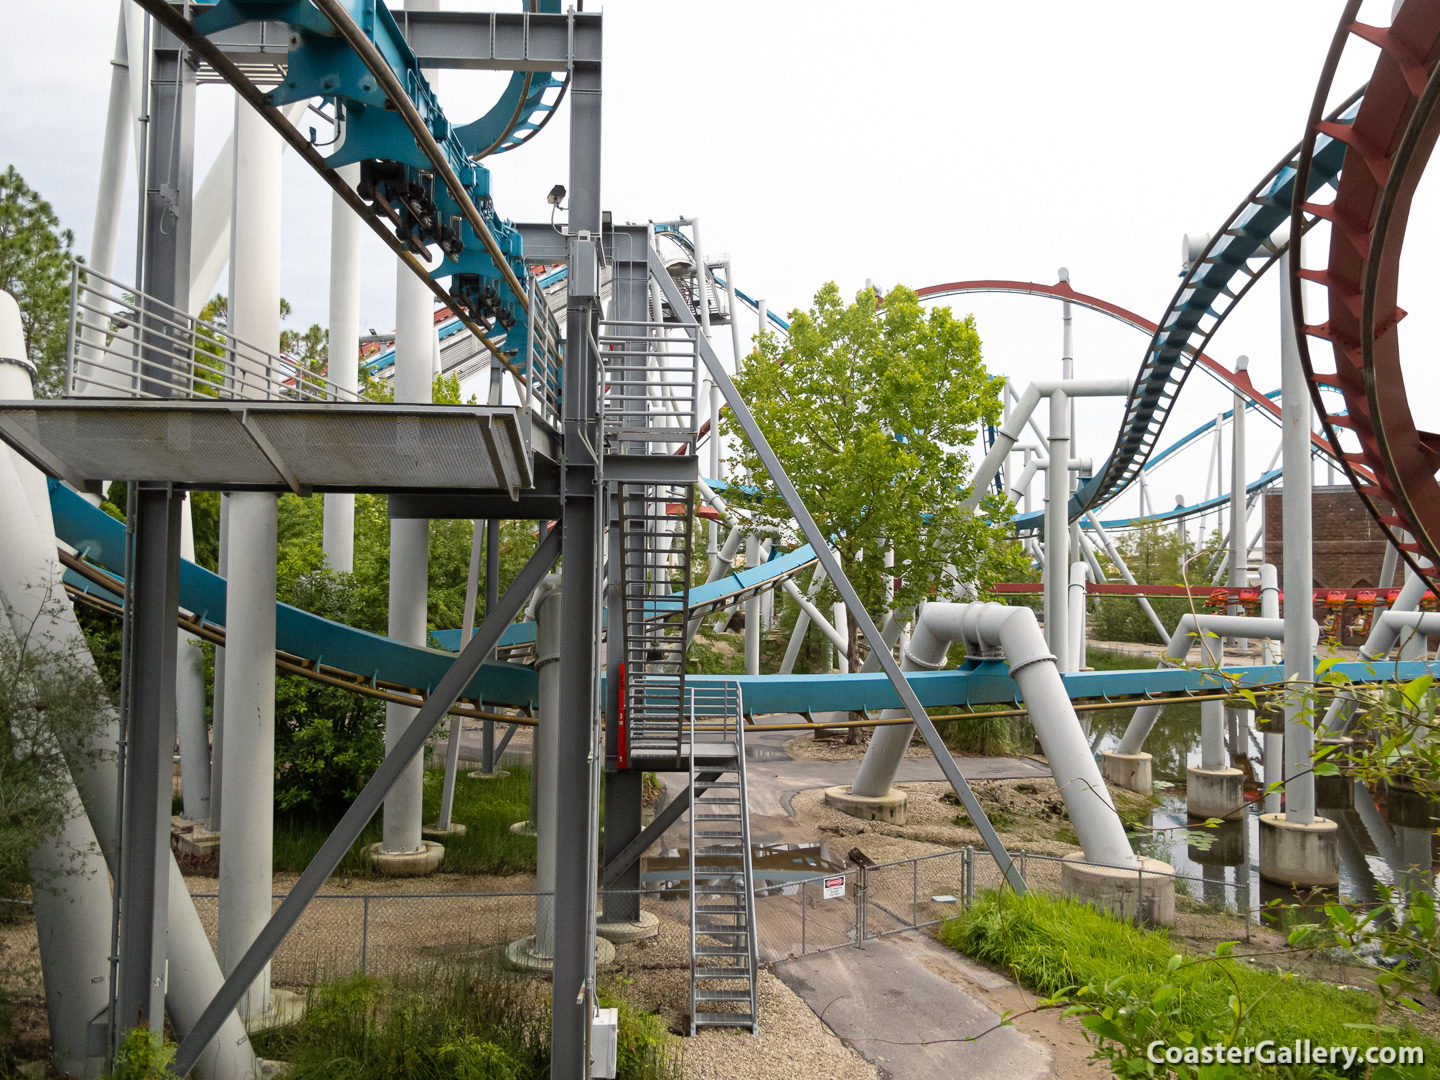 Hungarian Horntail roller coaster at Islands of Adventure - Universal Studios in Orlando, Florida